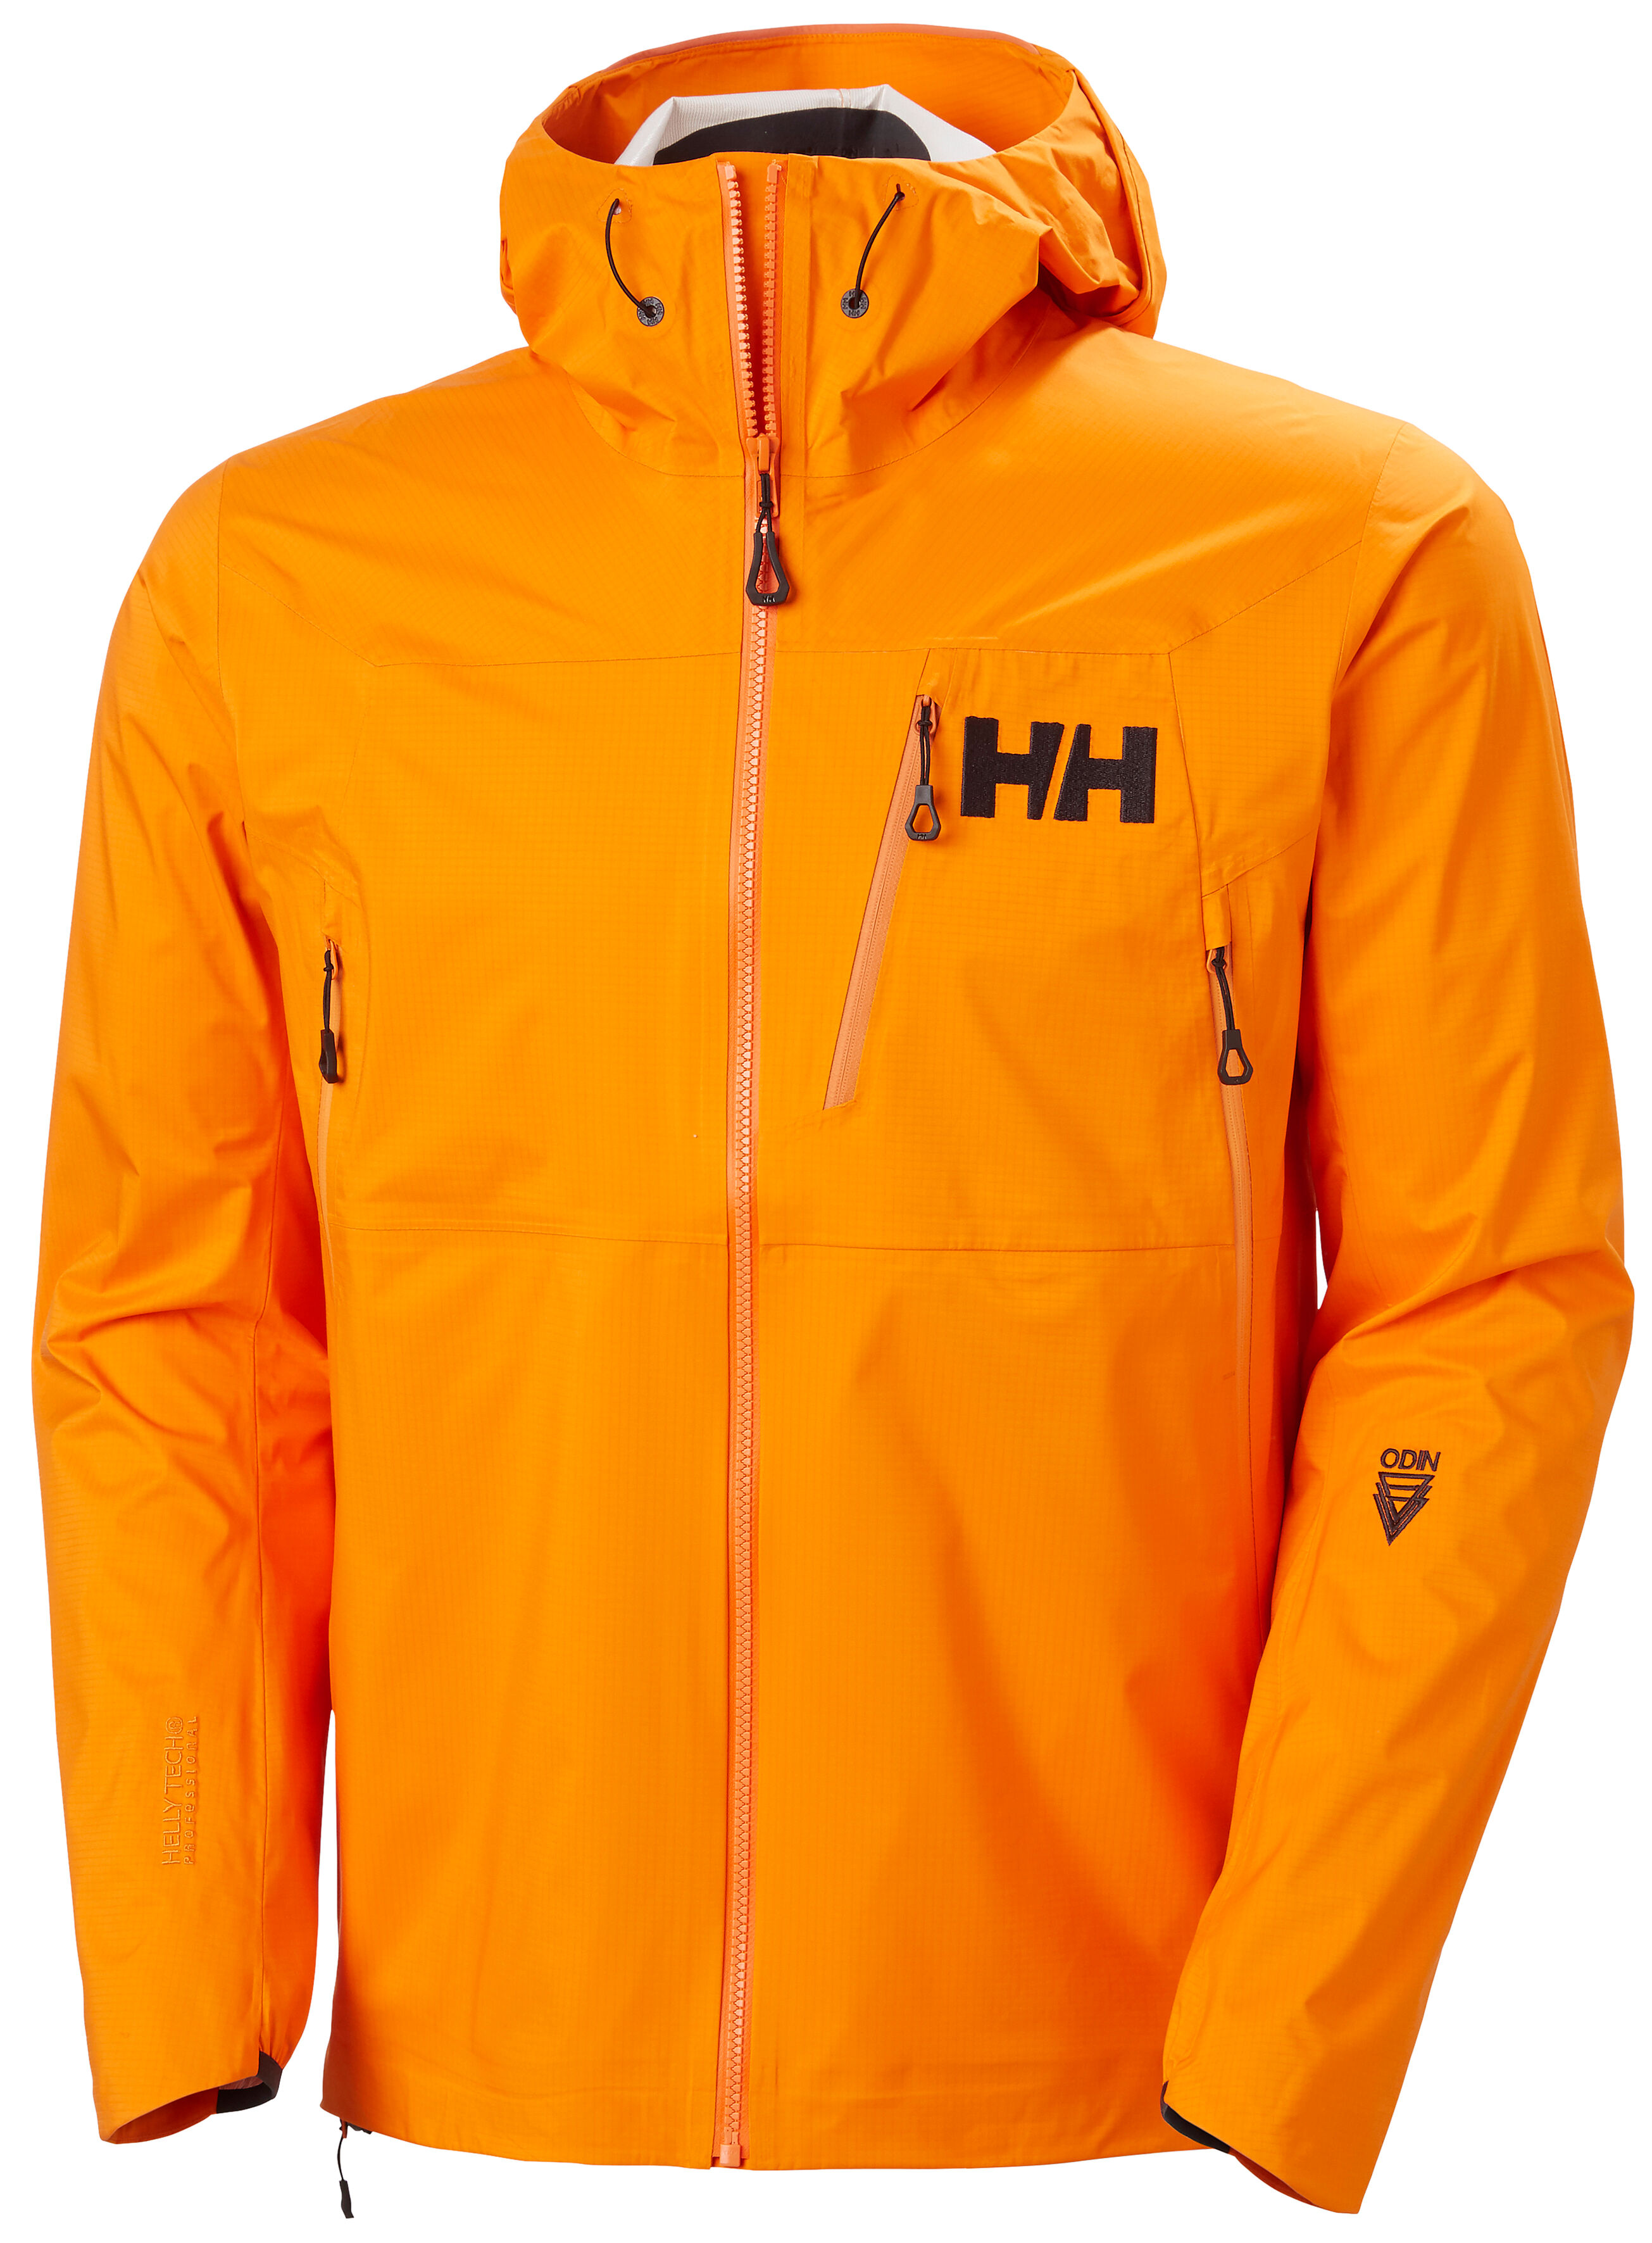 Helly Hansen Odin 3D Air Shell Jacket - Hardshell jacket - Men's